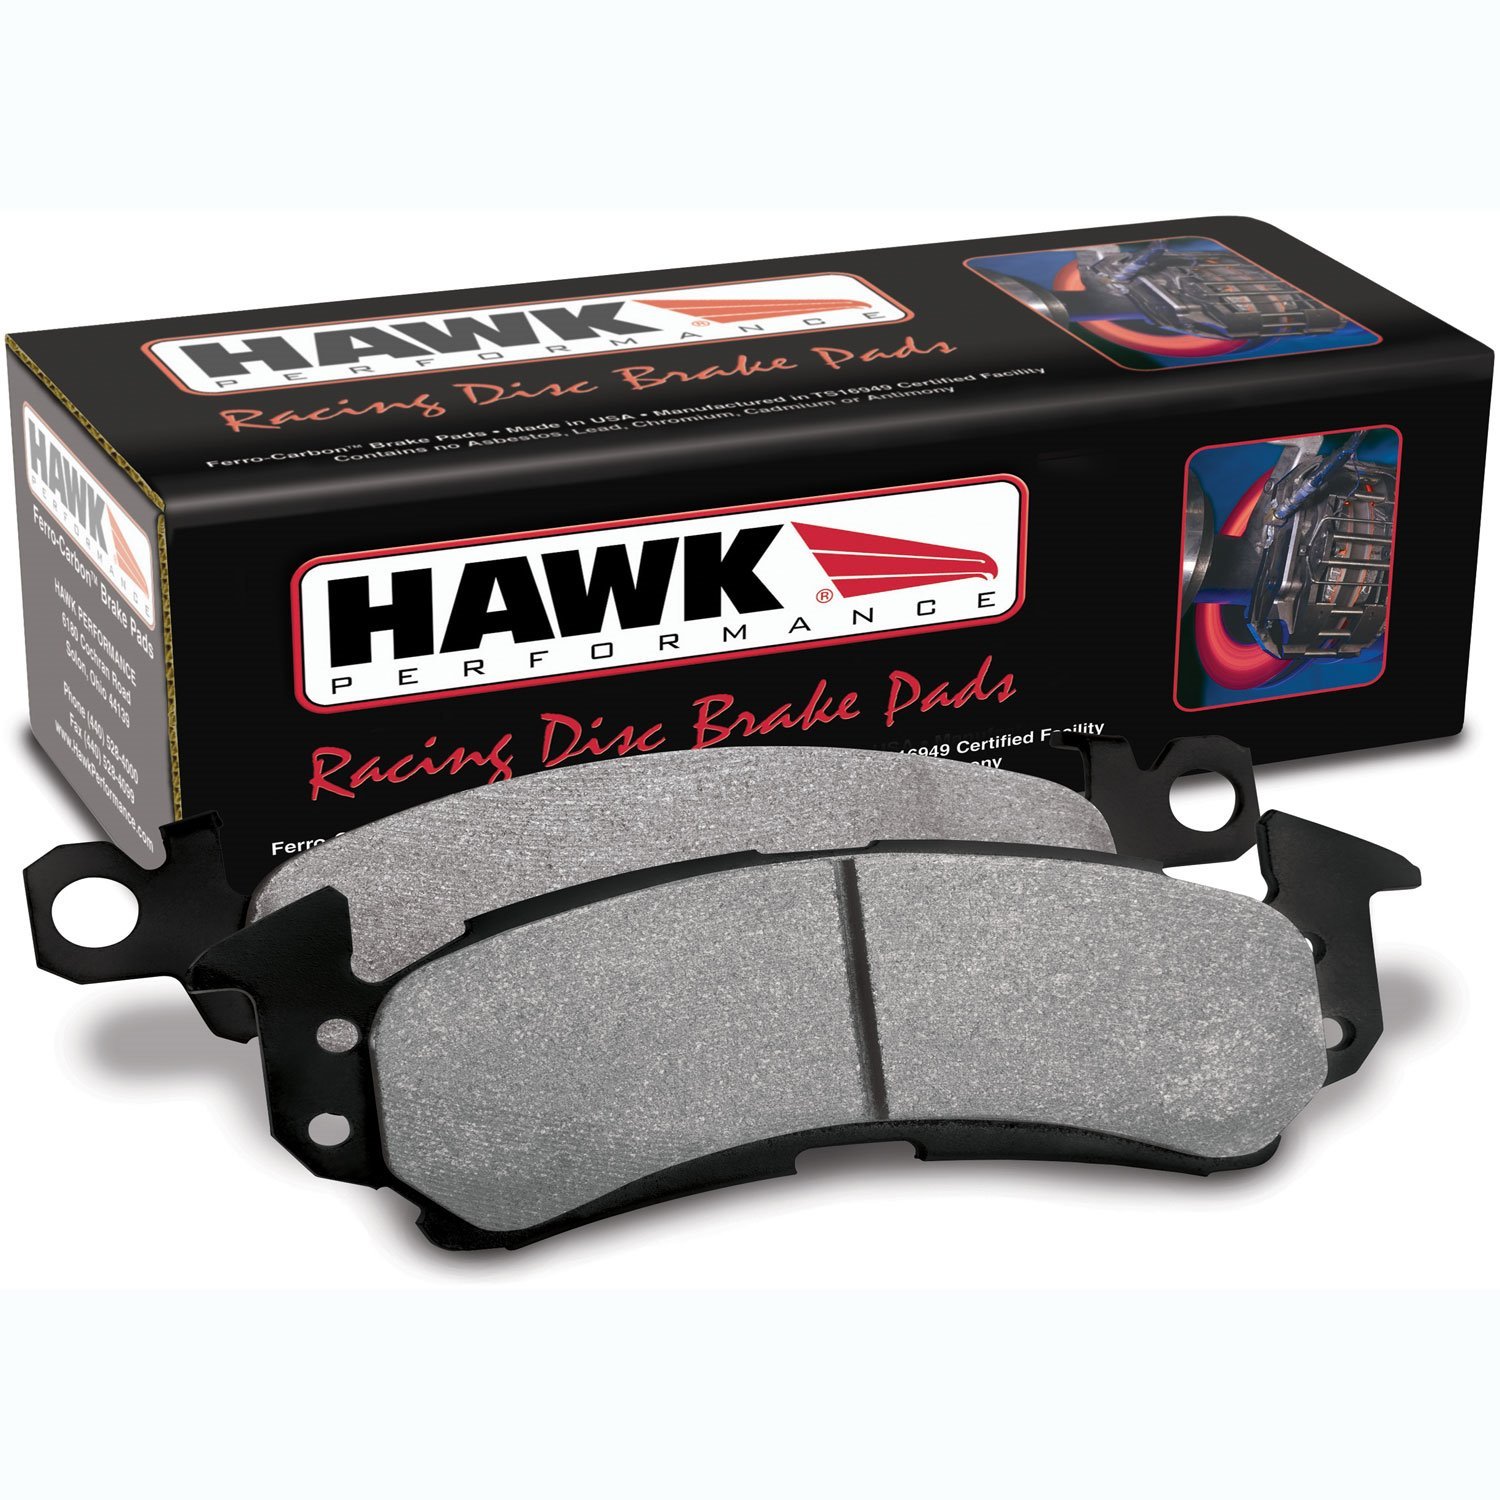 Disc Brake Pad HP Plus w/0.496 Thickness